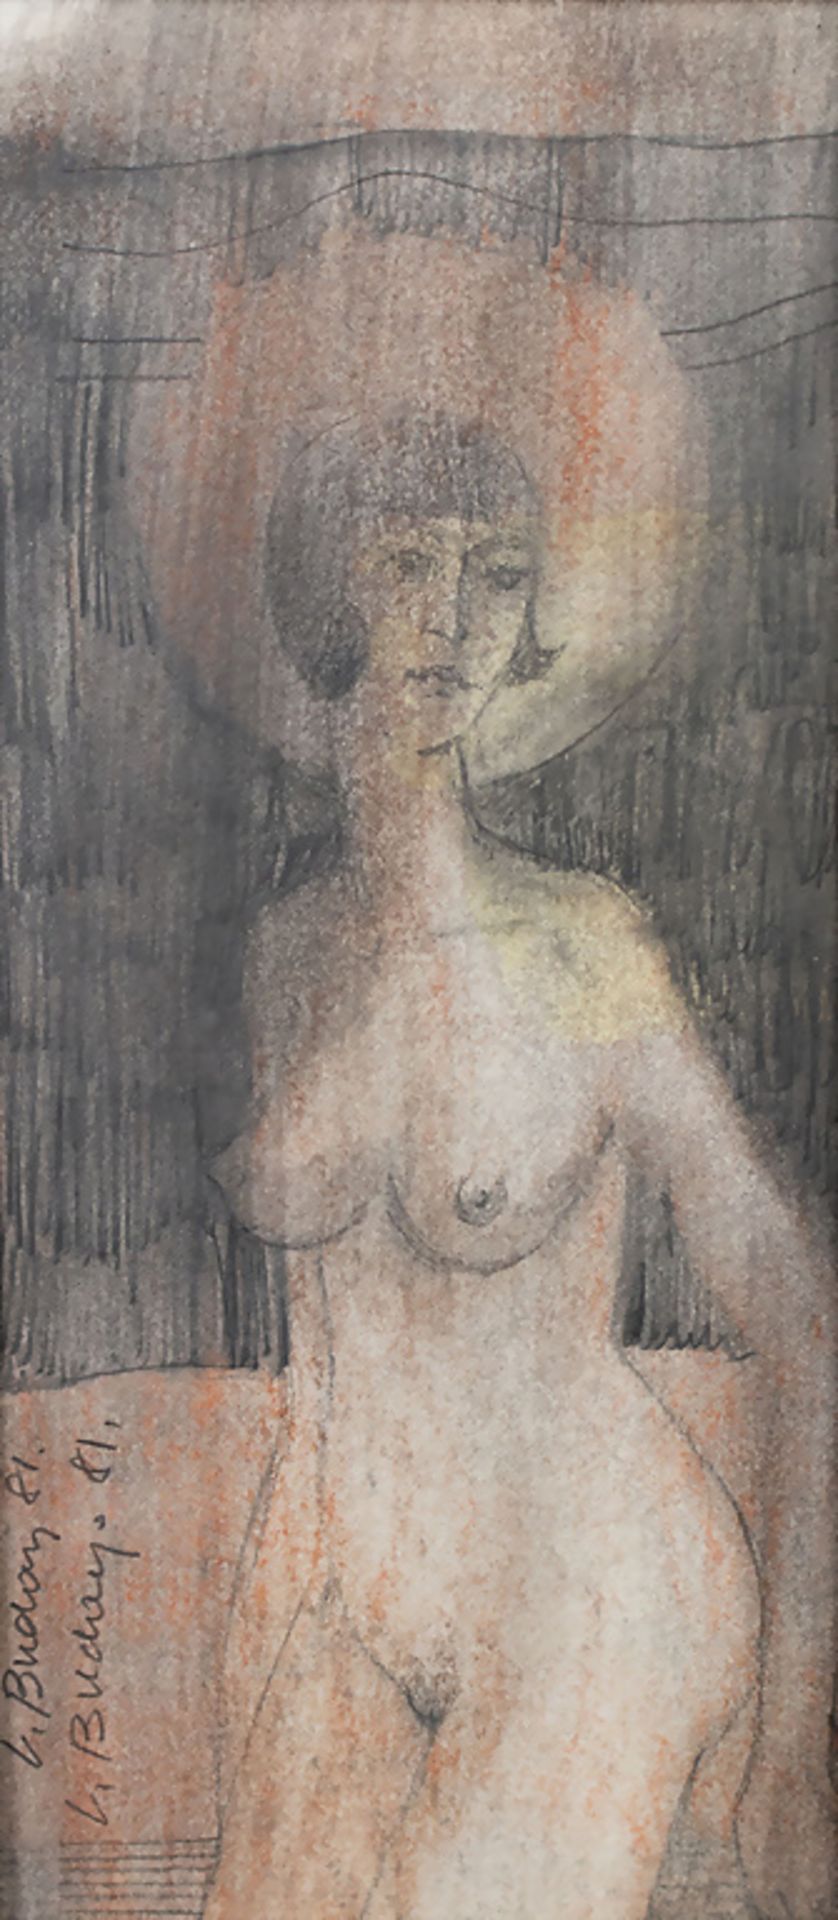 Laszlo BUDAY (1924-2017), 'Akt mit Sonne' / 'Nude with sun', 1981